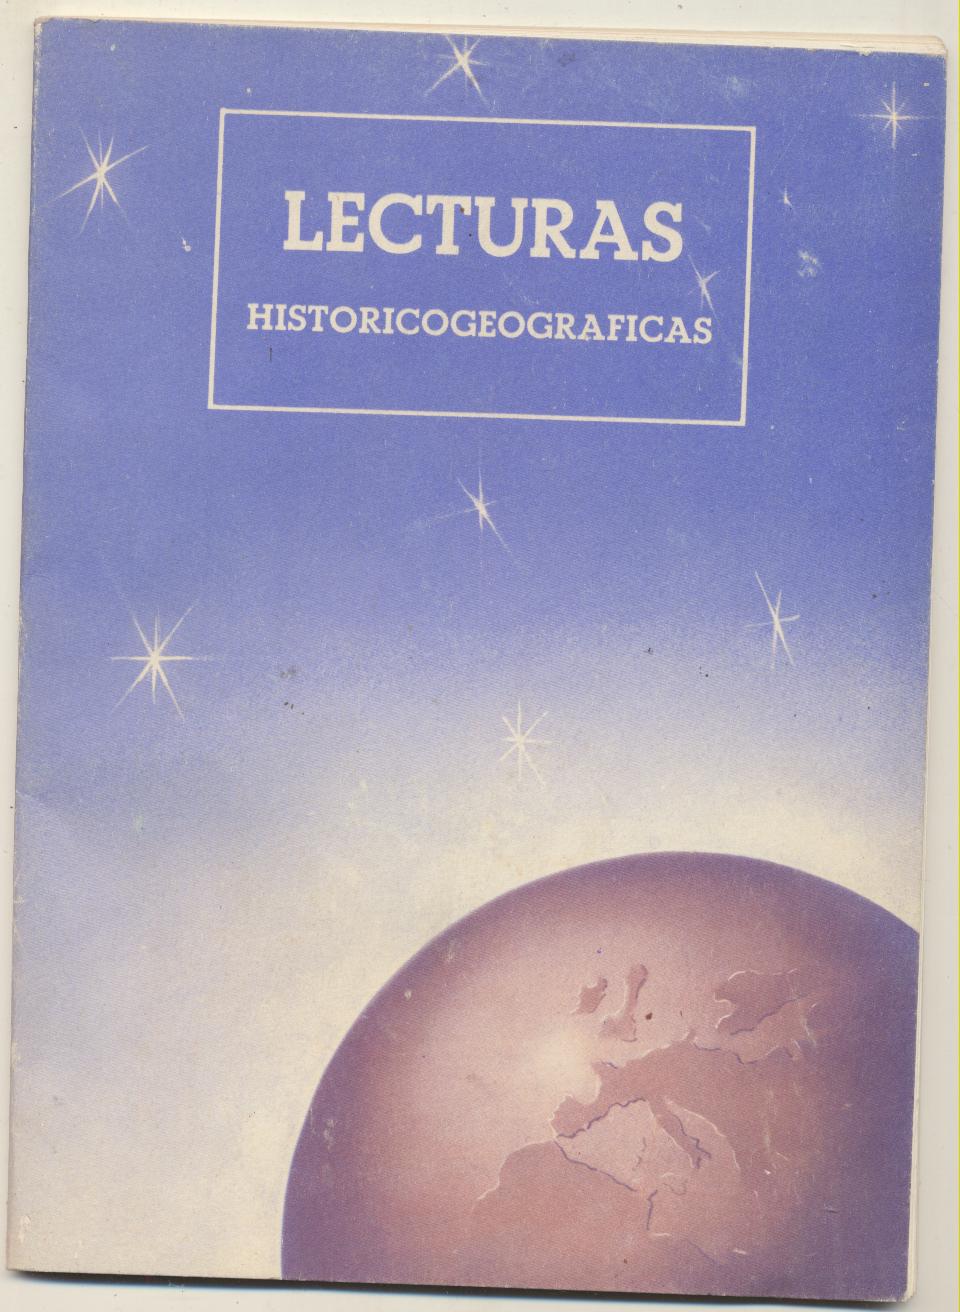 Lecturas Historicogeográficas. Editorial Vicens-Vives. 1963